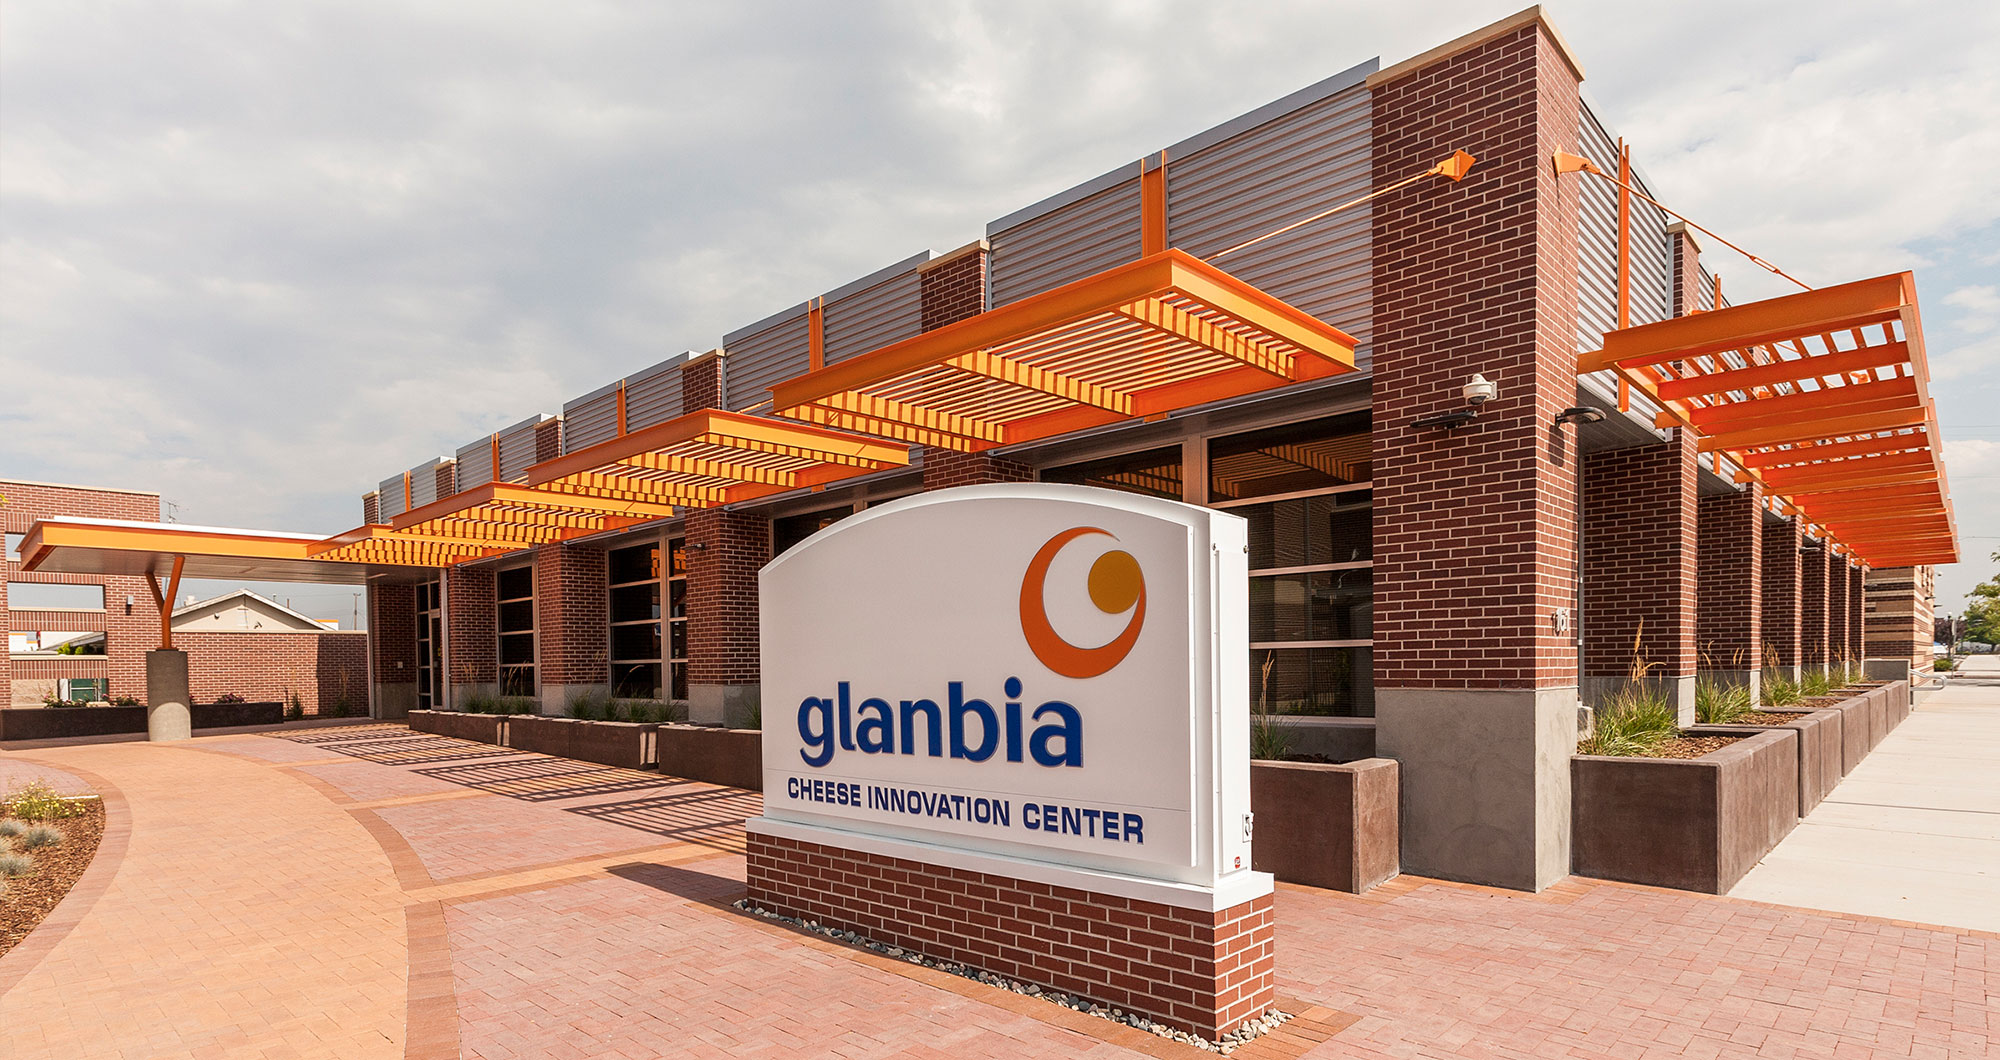 Glanbia Cheese Innovation Center